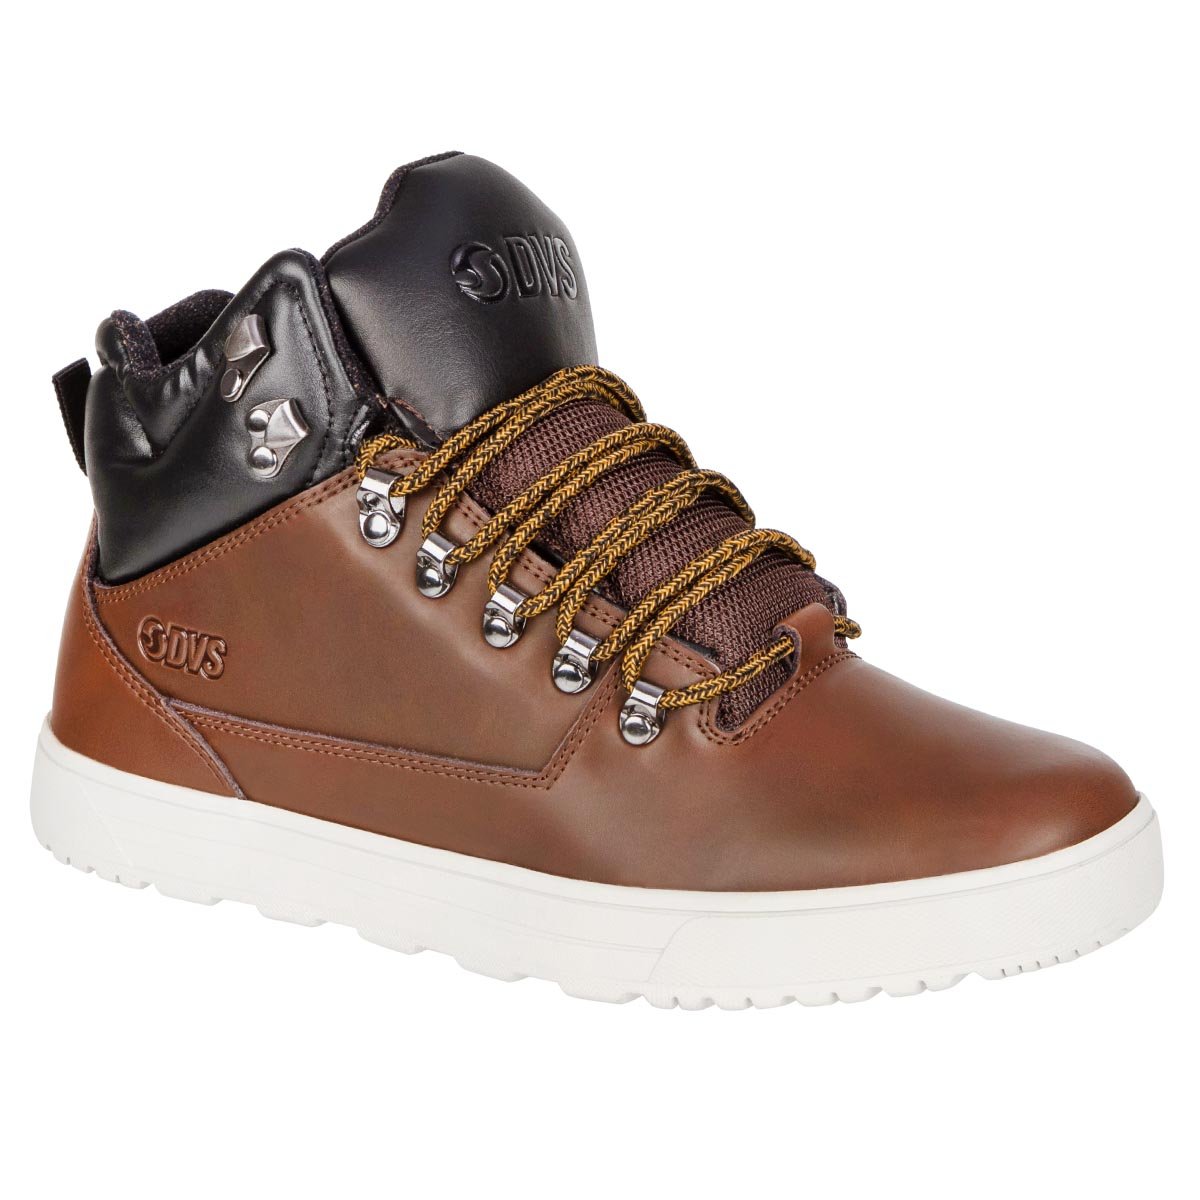 DVS Schuhe Vanguard+ Brown Leather